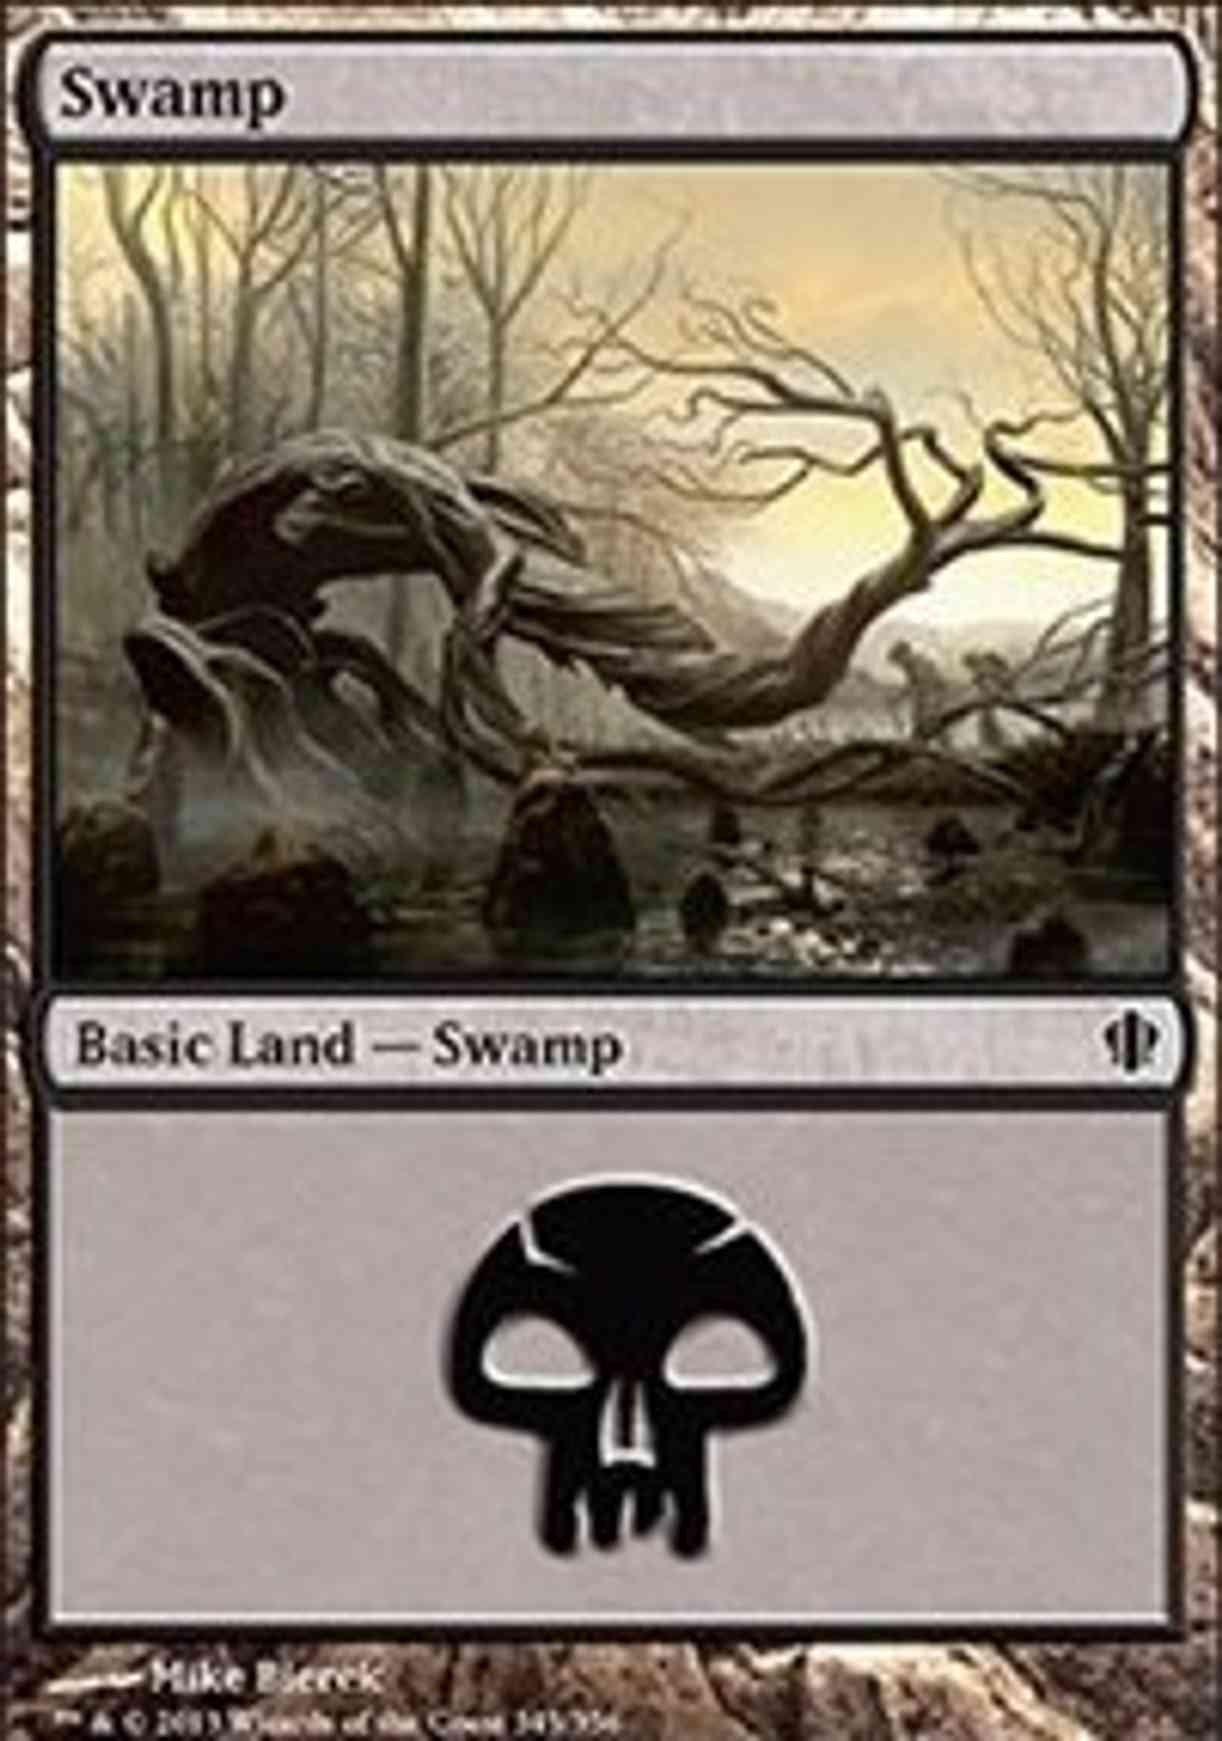 Swamp (345) magic card front